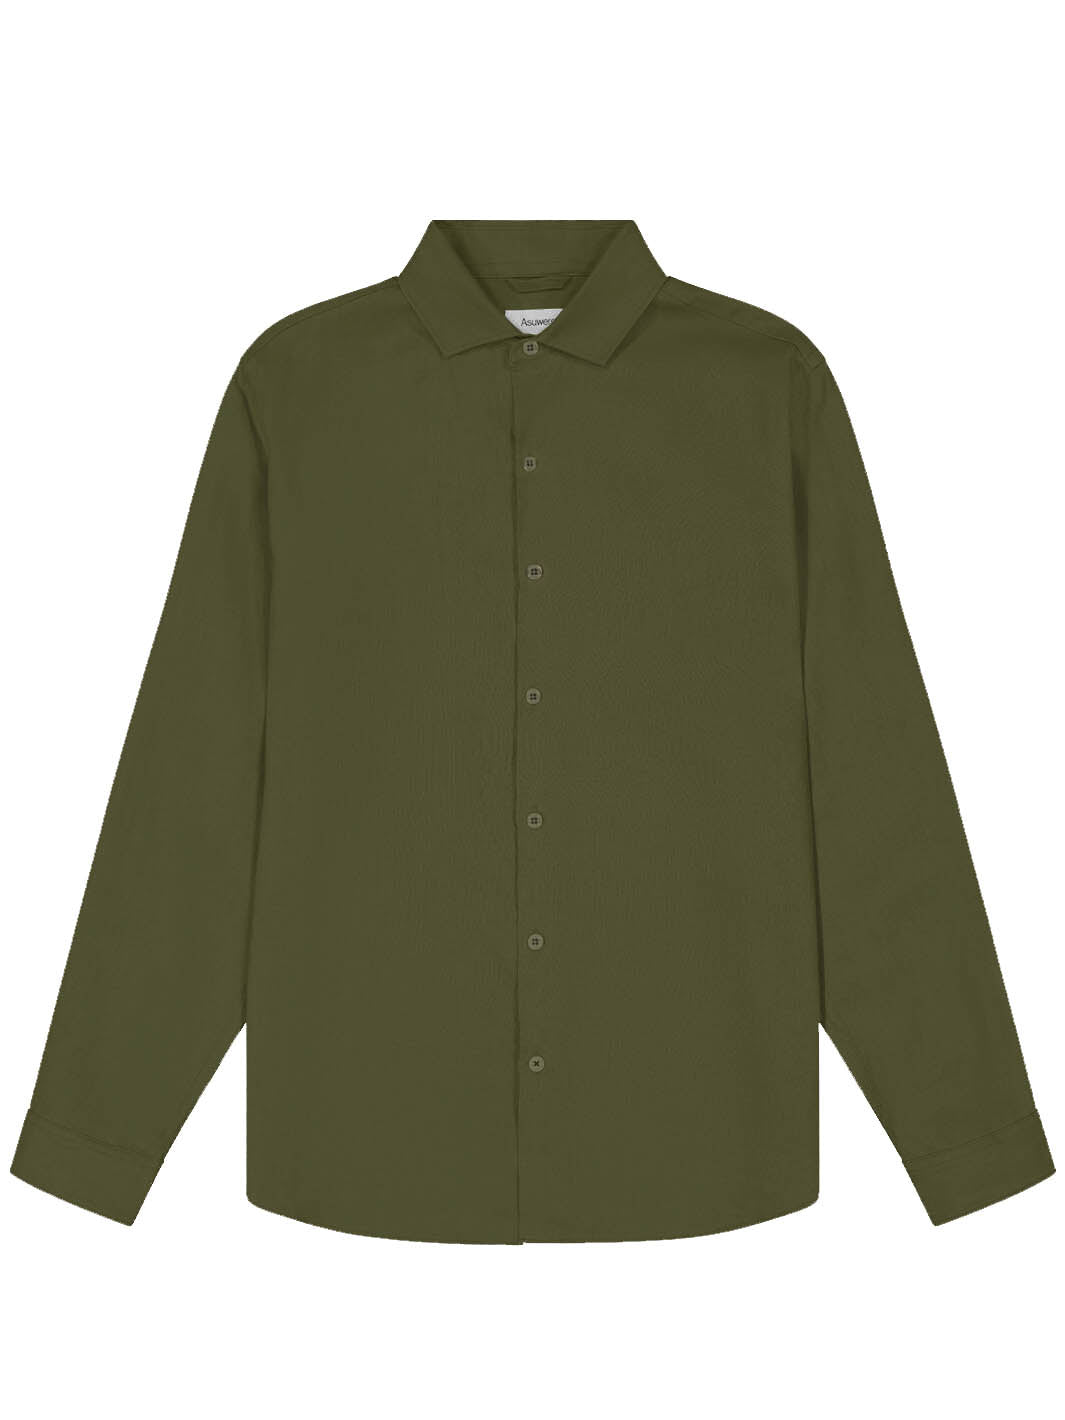 Essential Linen Shirt - Army